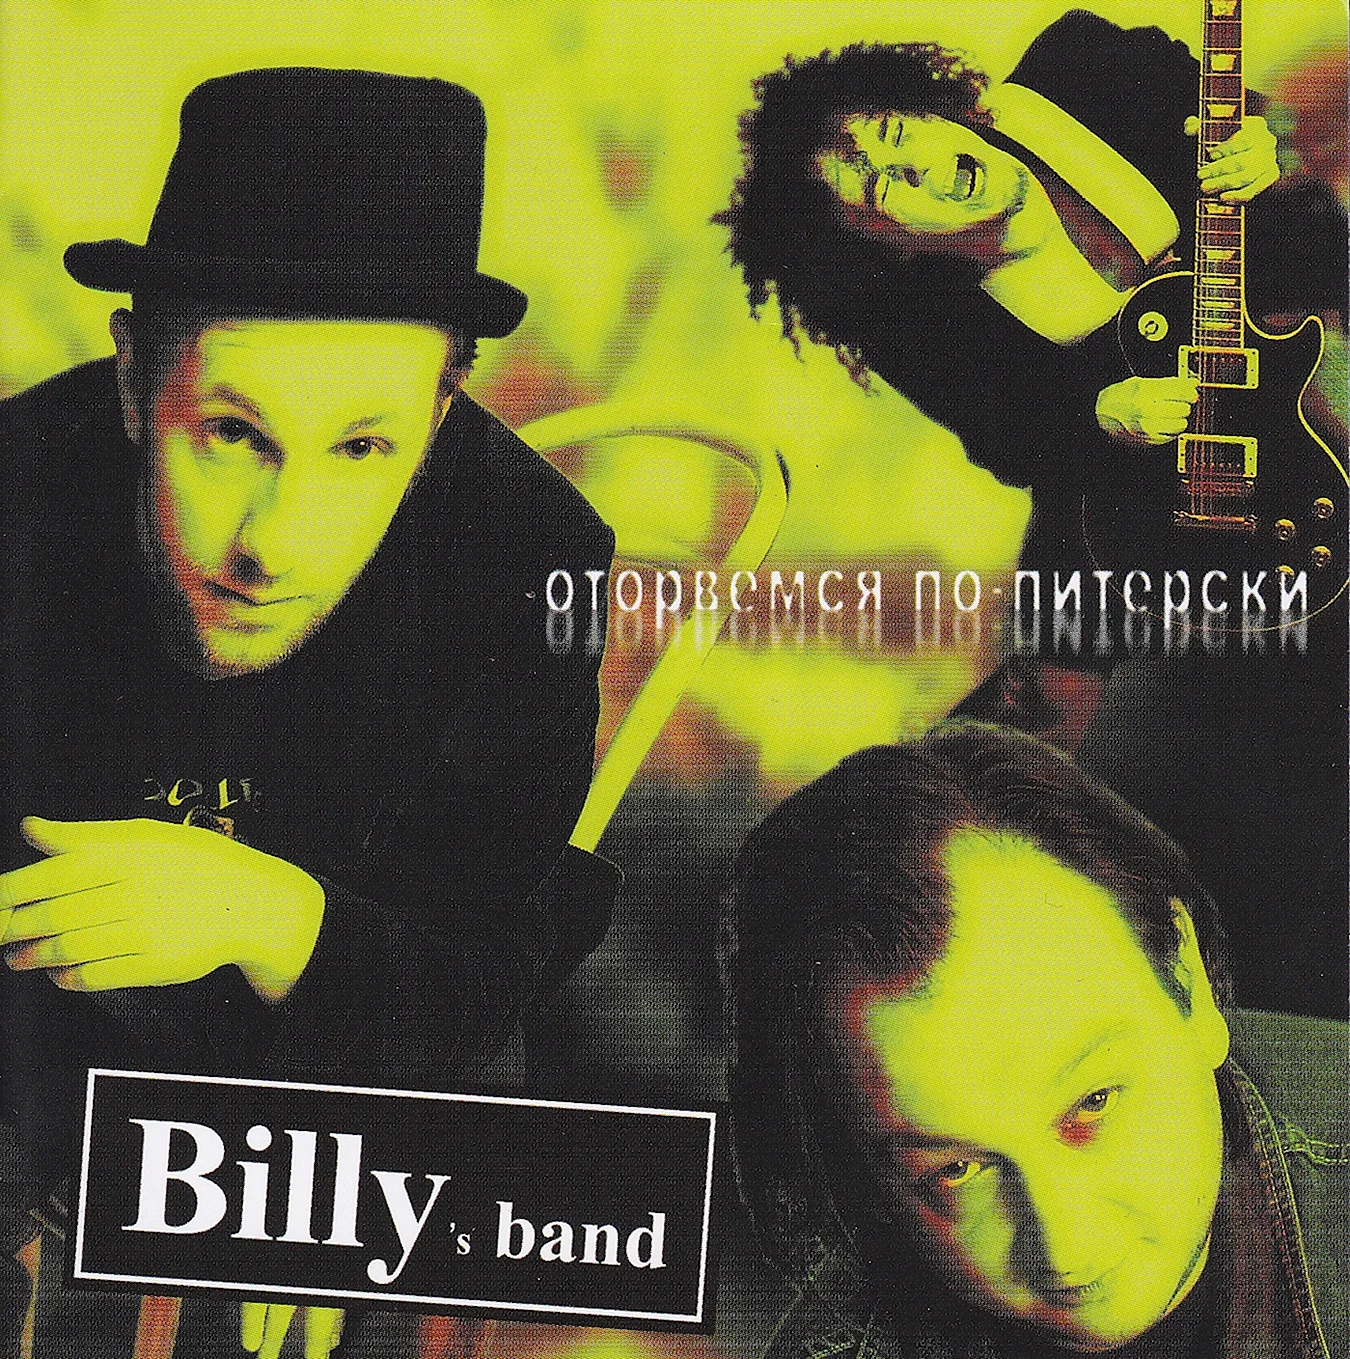 CD Billys Band оторвемся по-питерски